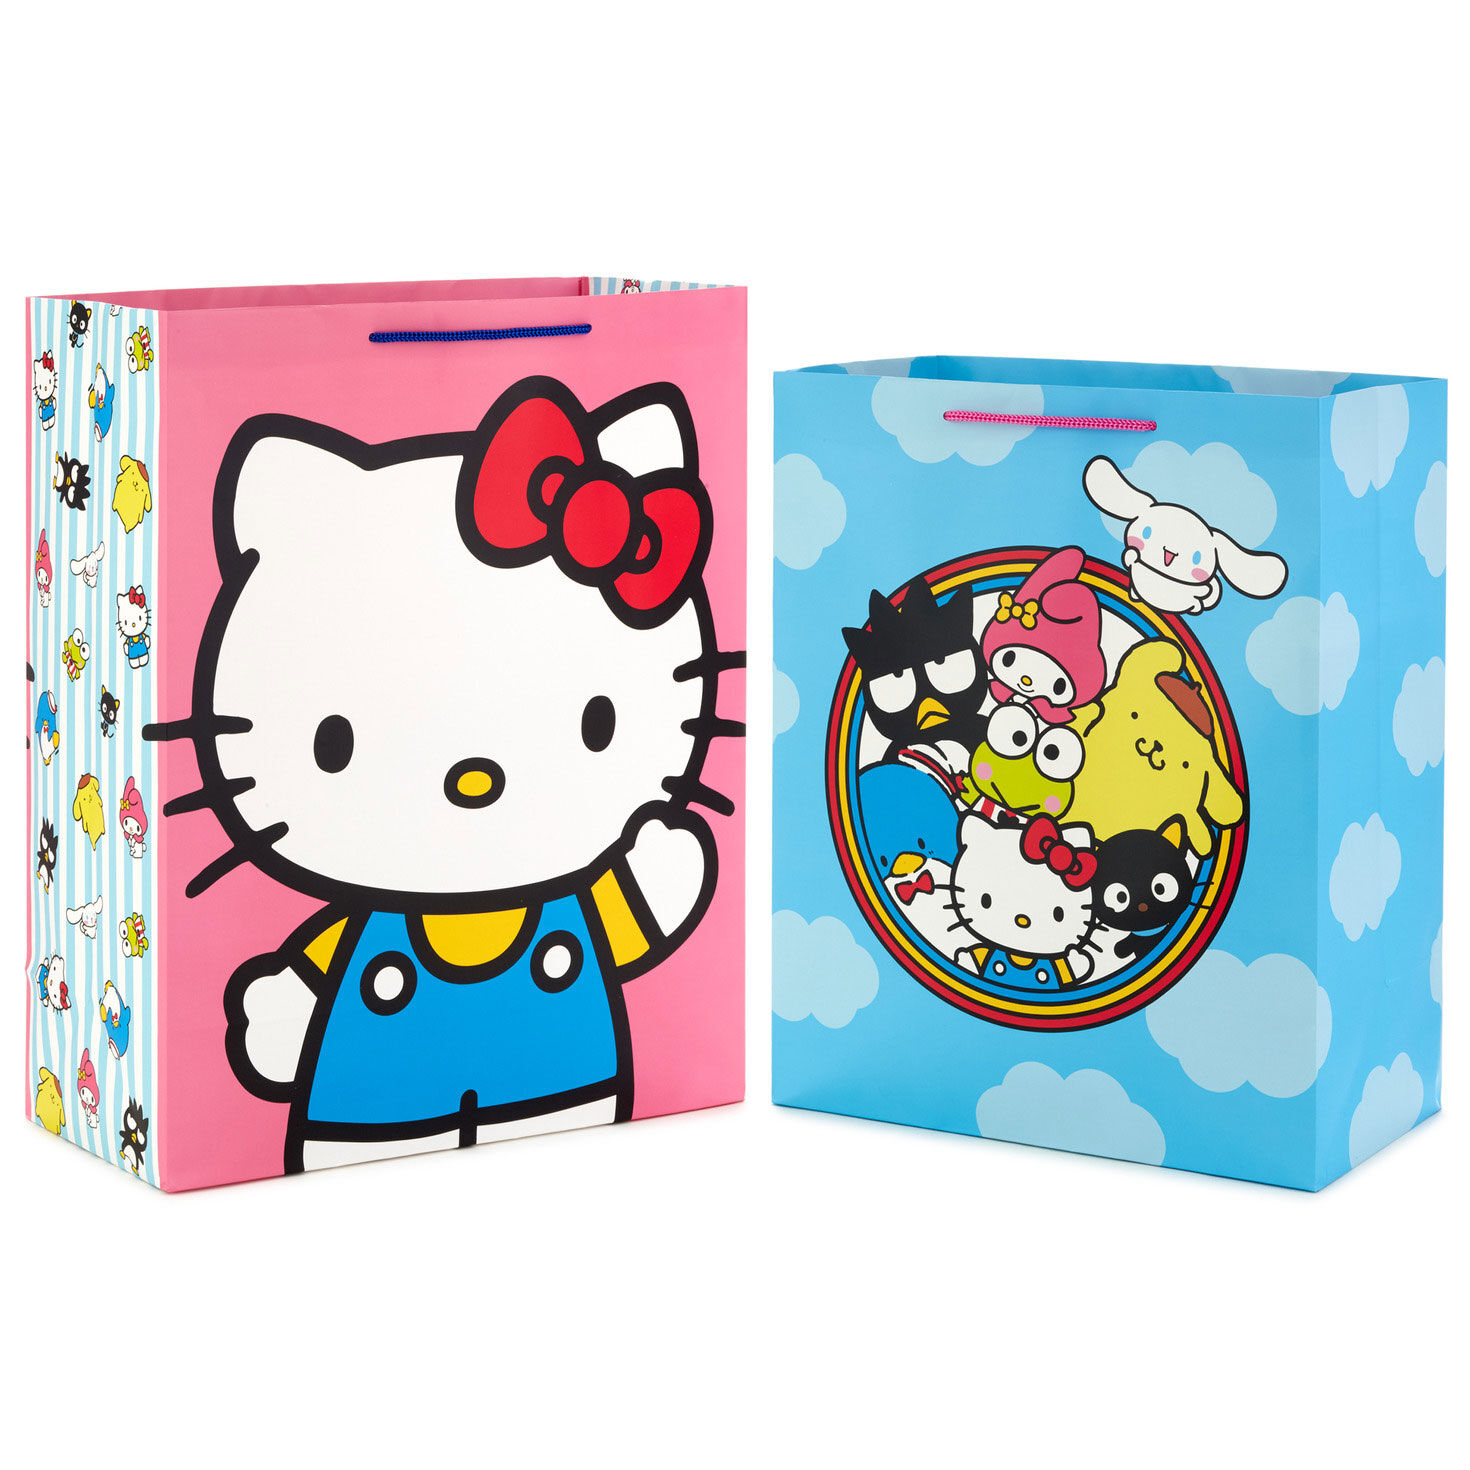 Hello Kitty, Office, Hello Kitty Valentines Day Cards